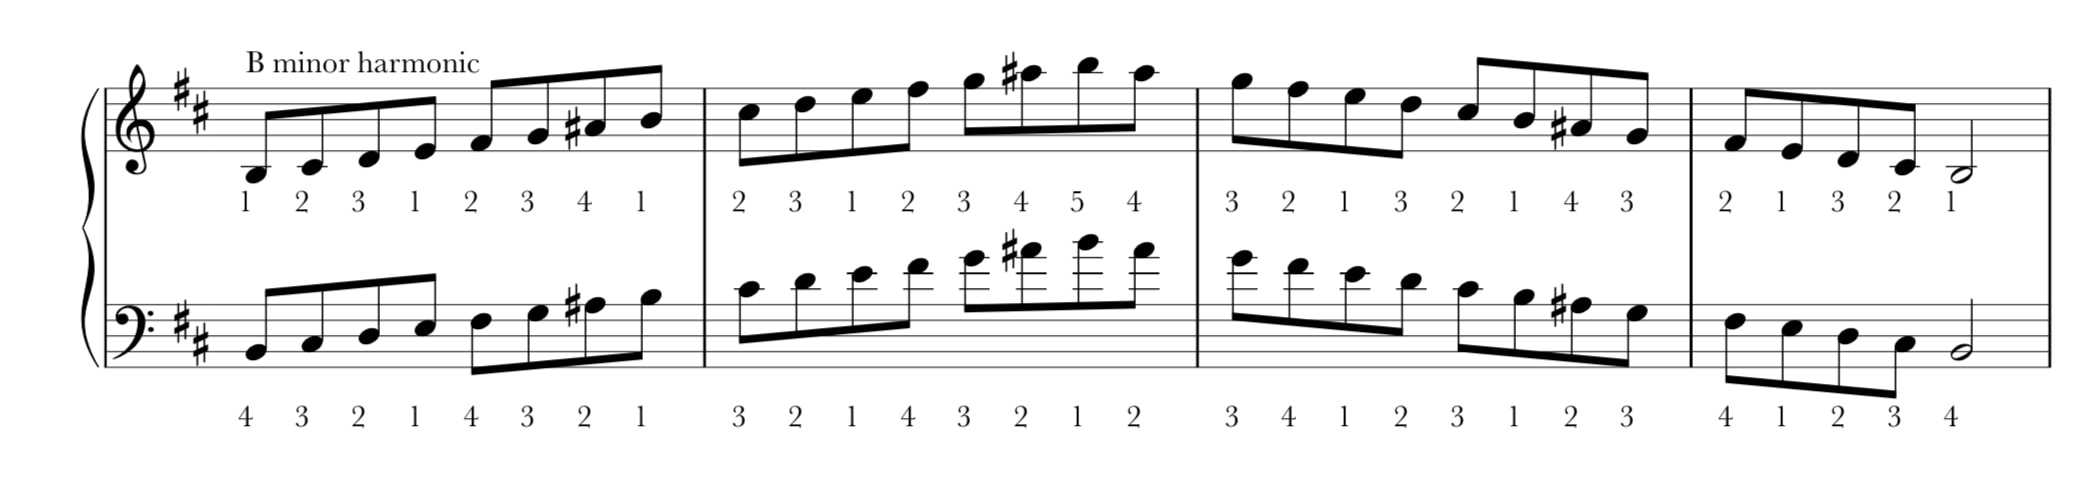 e harmonic minor b flat minor scale